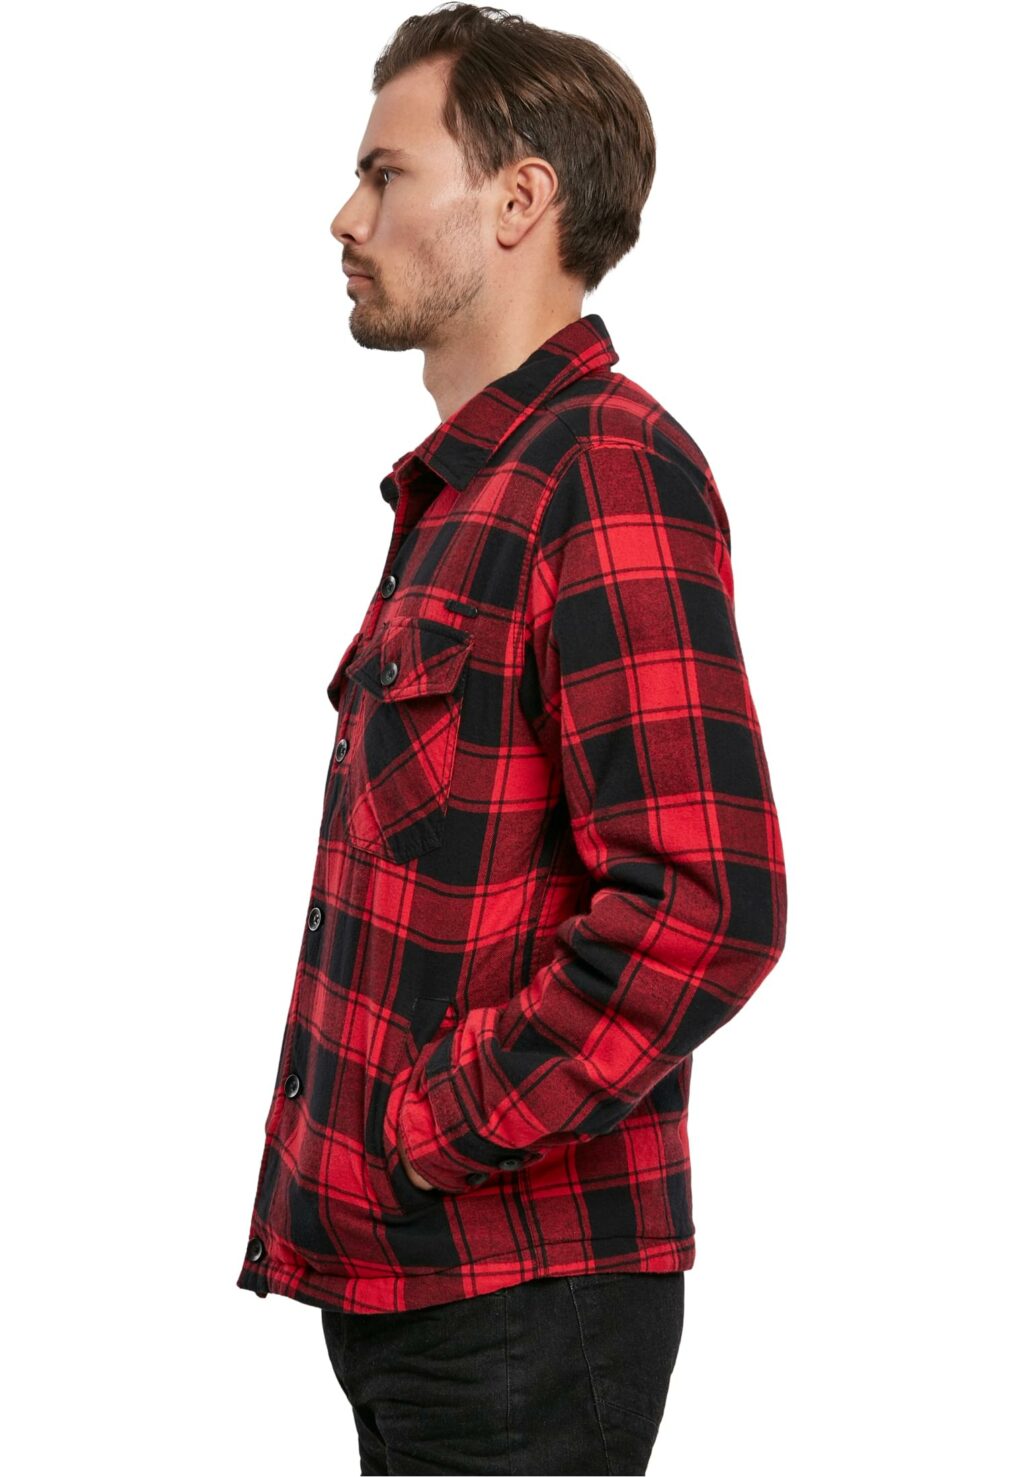 Brandit Lumberjacket red/black BD9478